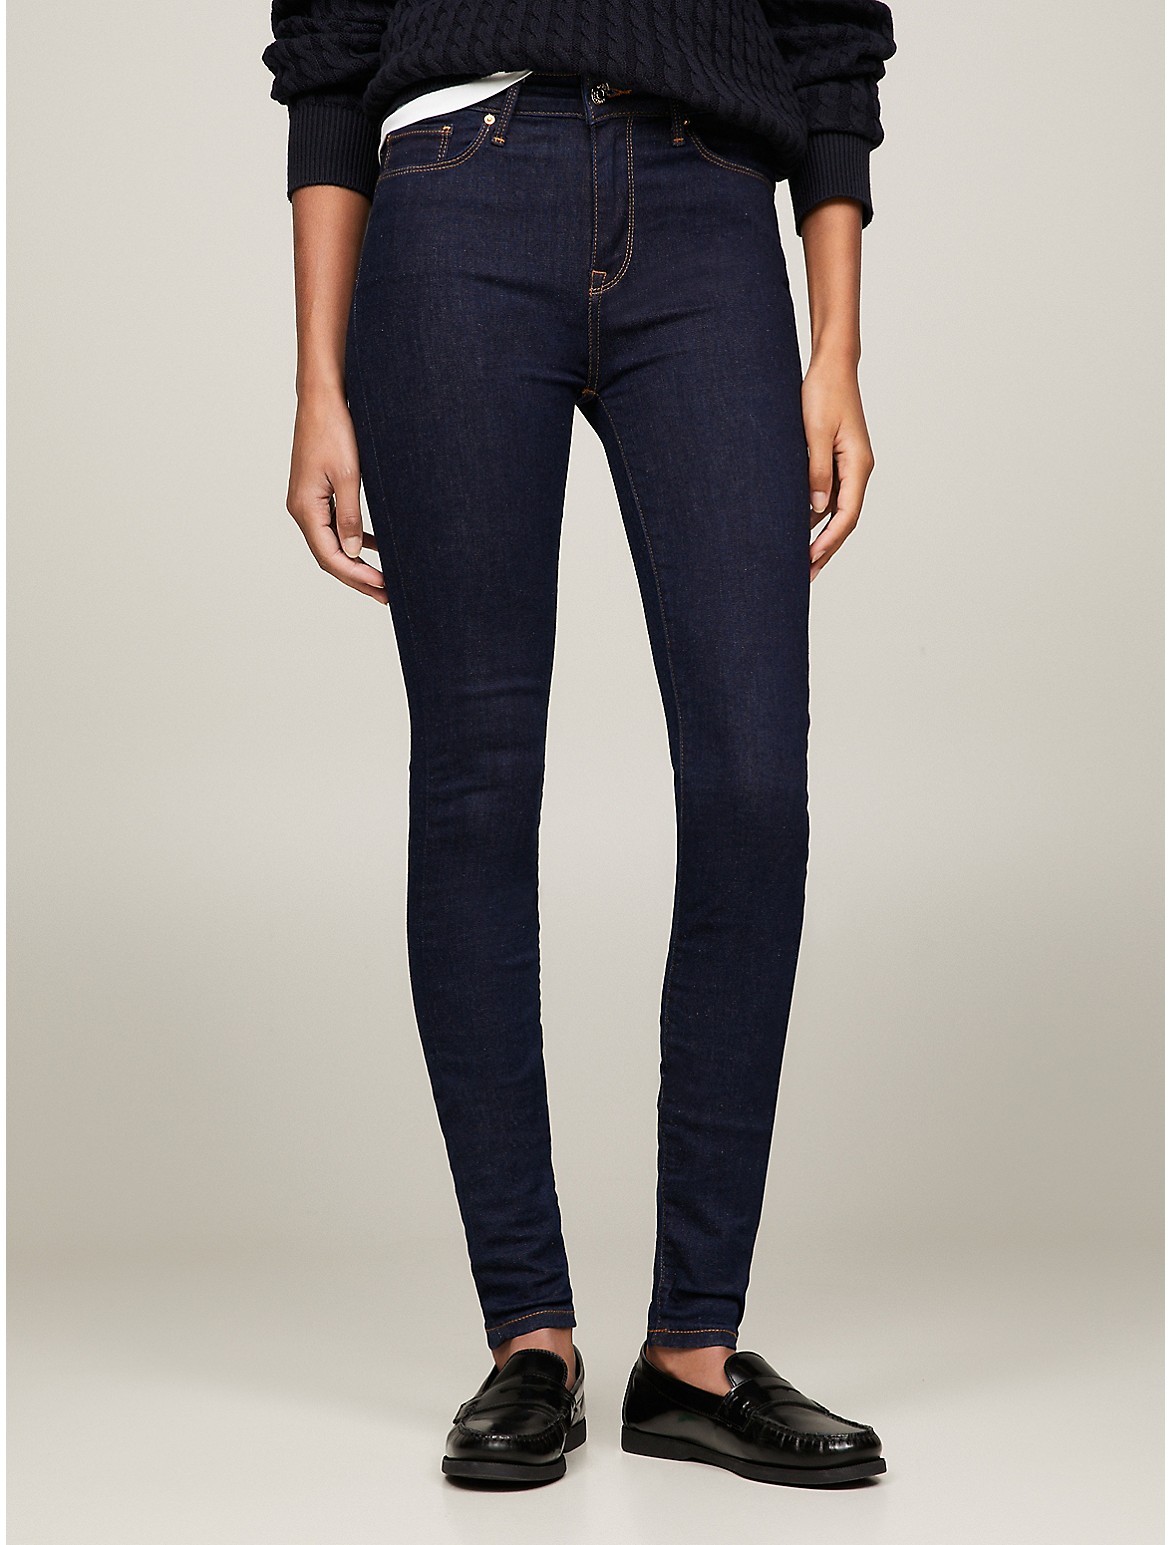 Tommy Hilfiger Women's Super Skinny Fit Dark Wash Jean